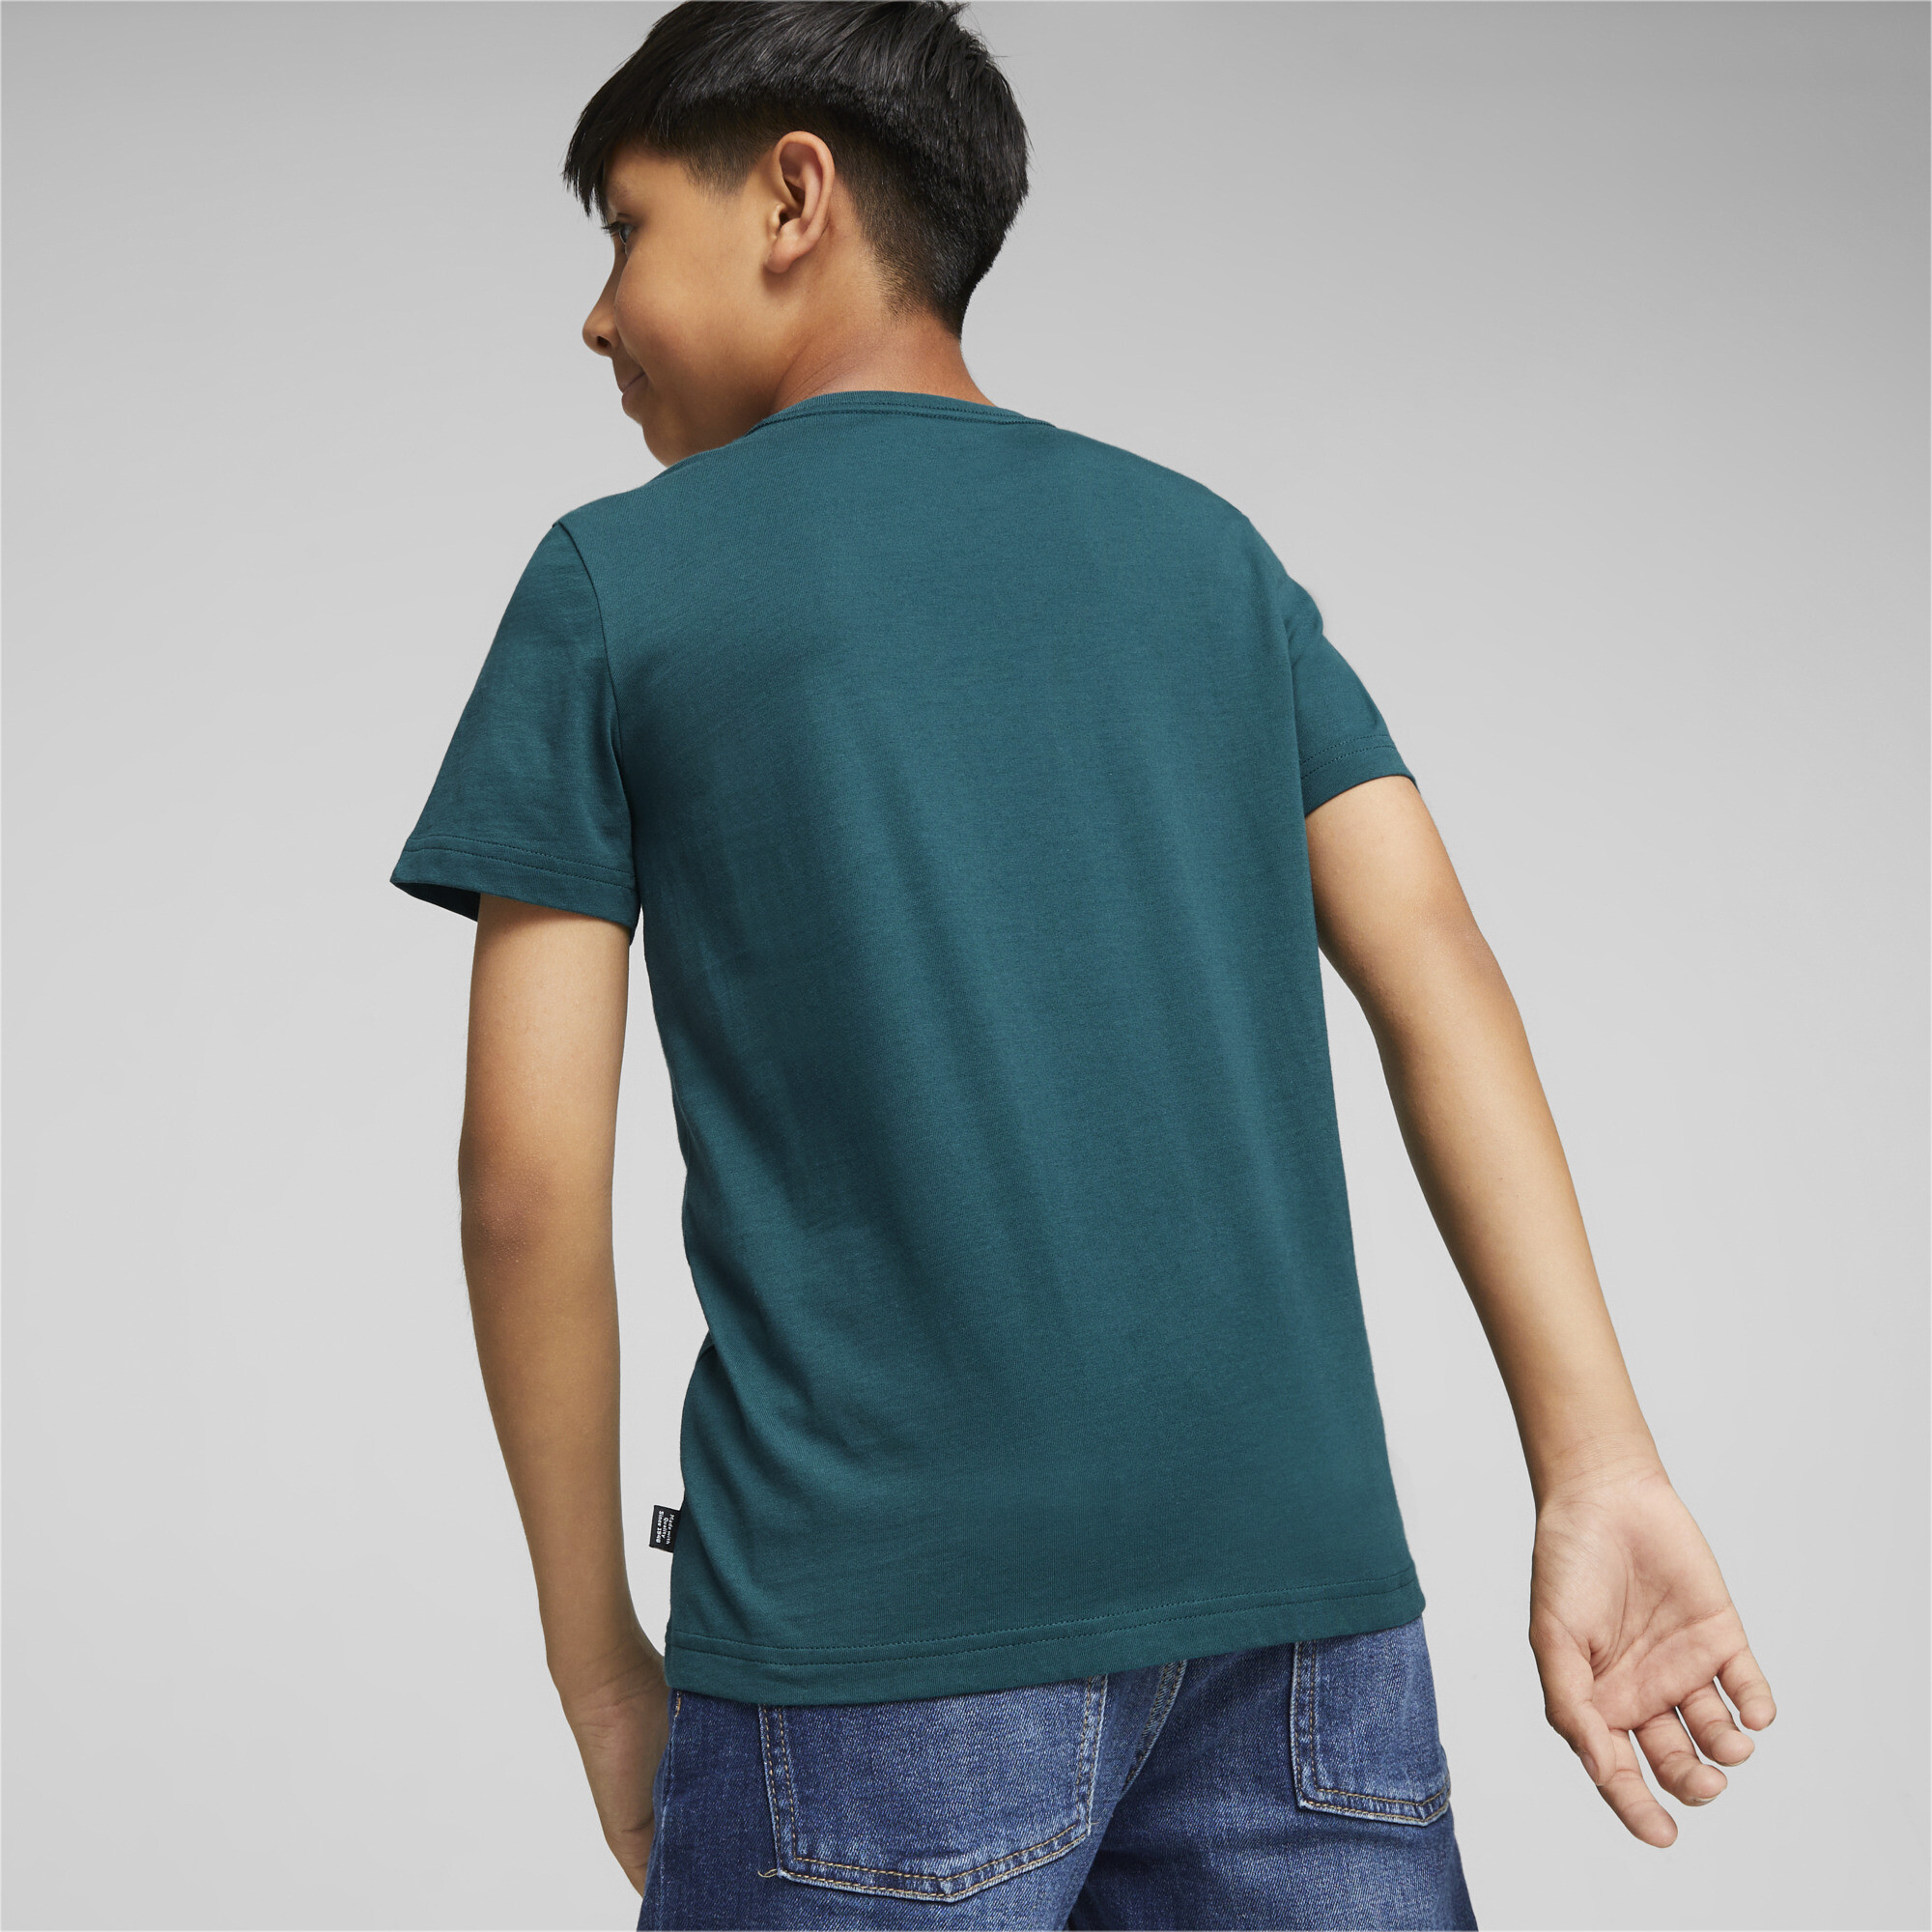 Men's Puma Essentials+ Two-Tone Logo Youth T-Shirt, Green, Size 2-3Y, Clothing